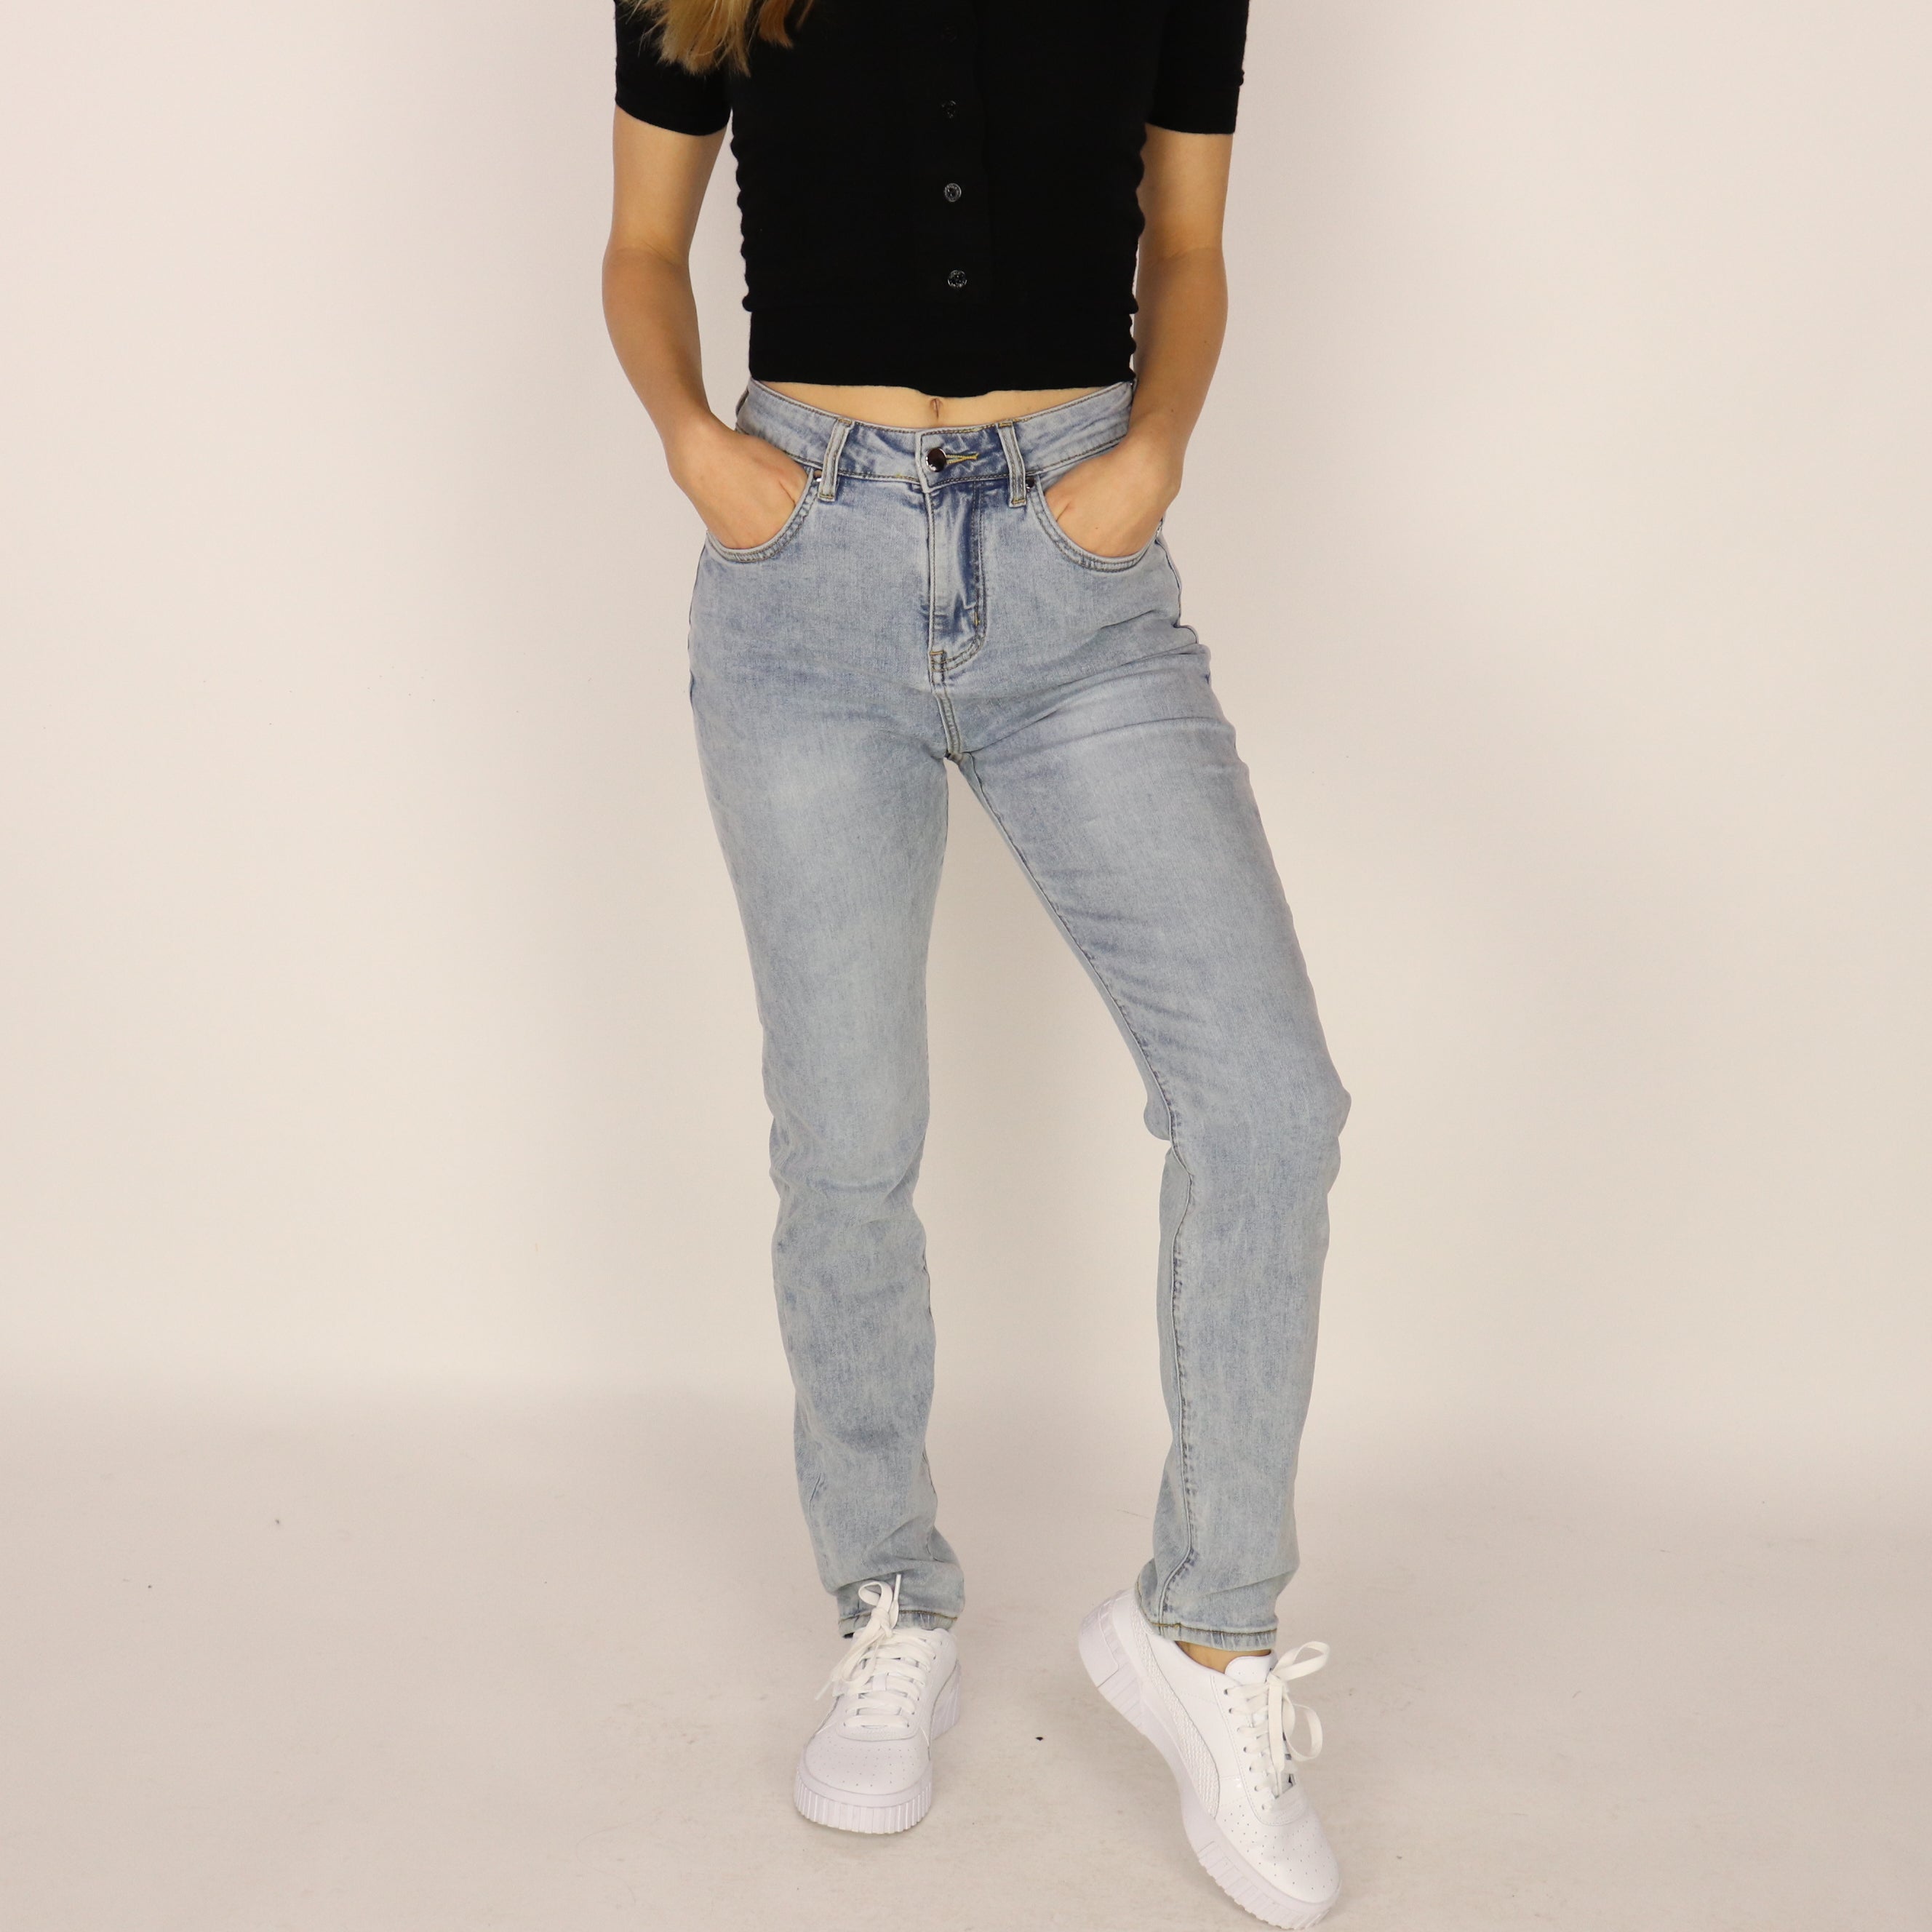 Jeans, Size 8